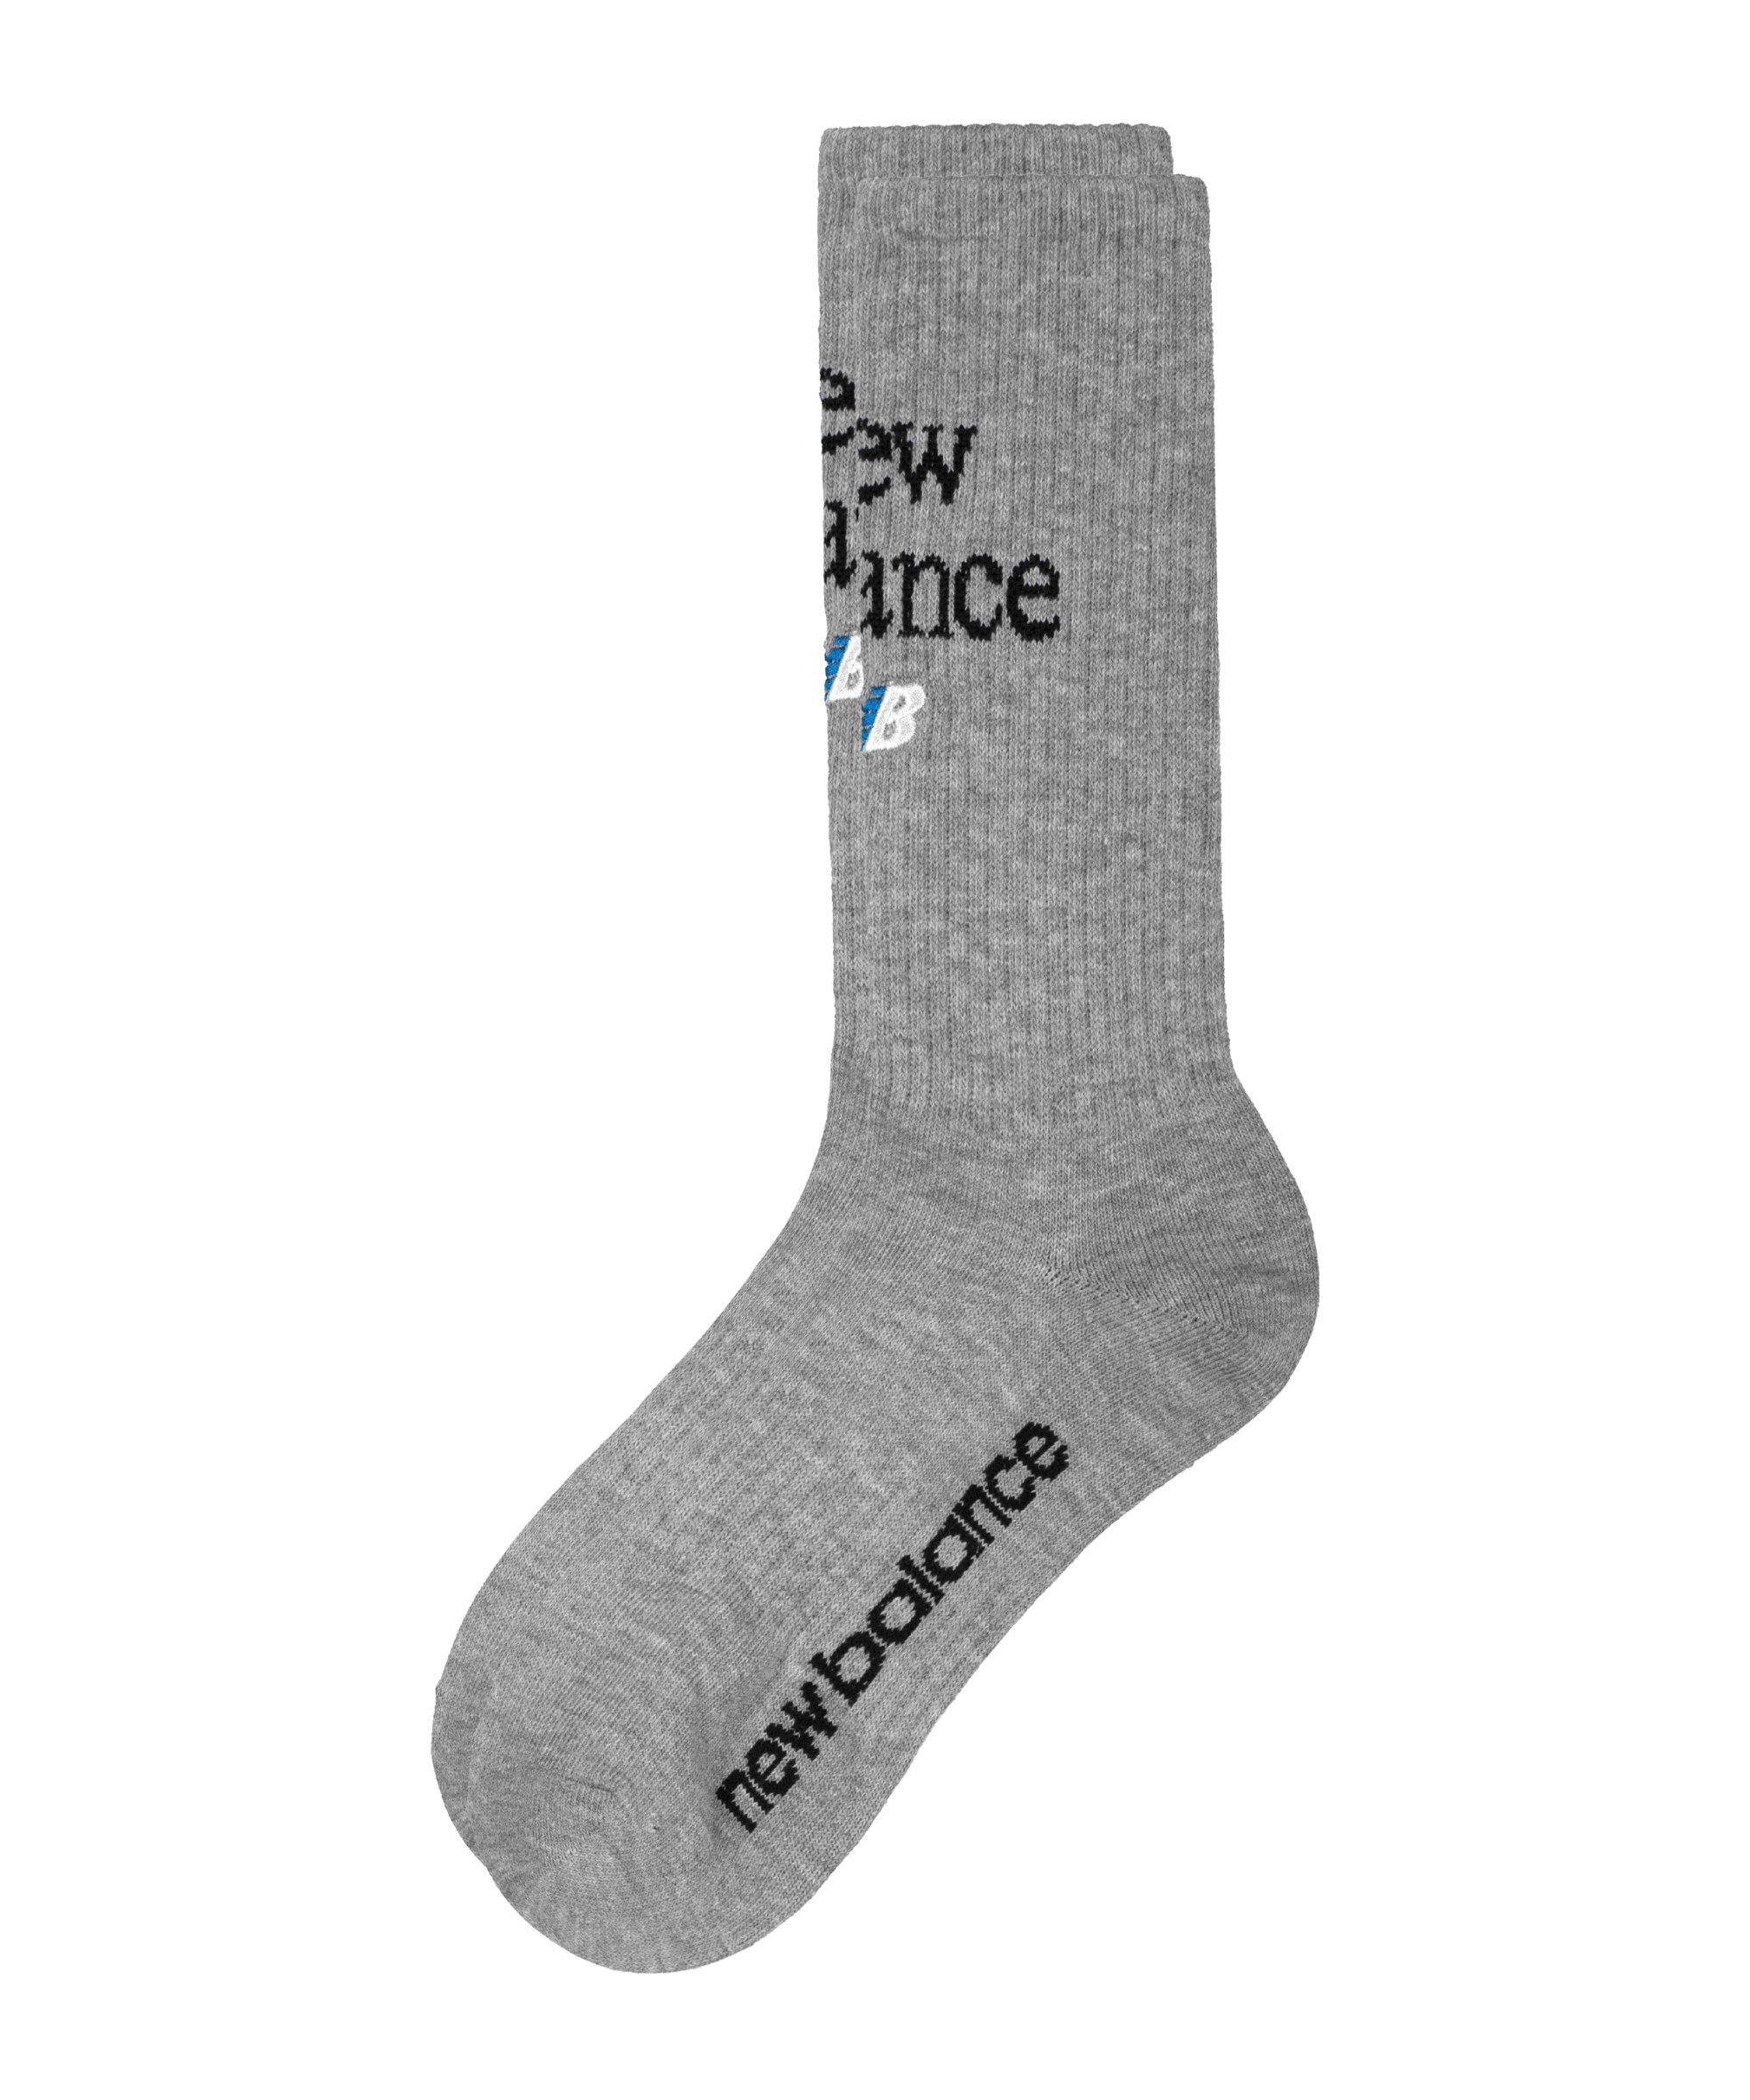 New Balance Essentials Crew Socken Grau - grau